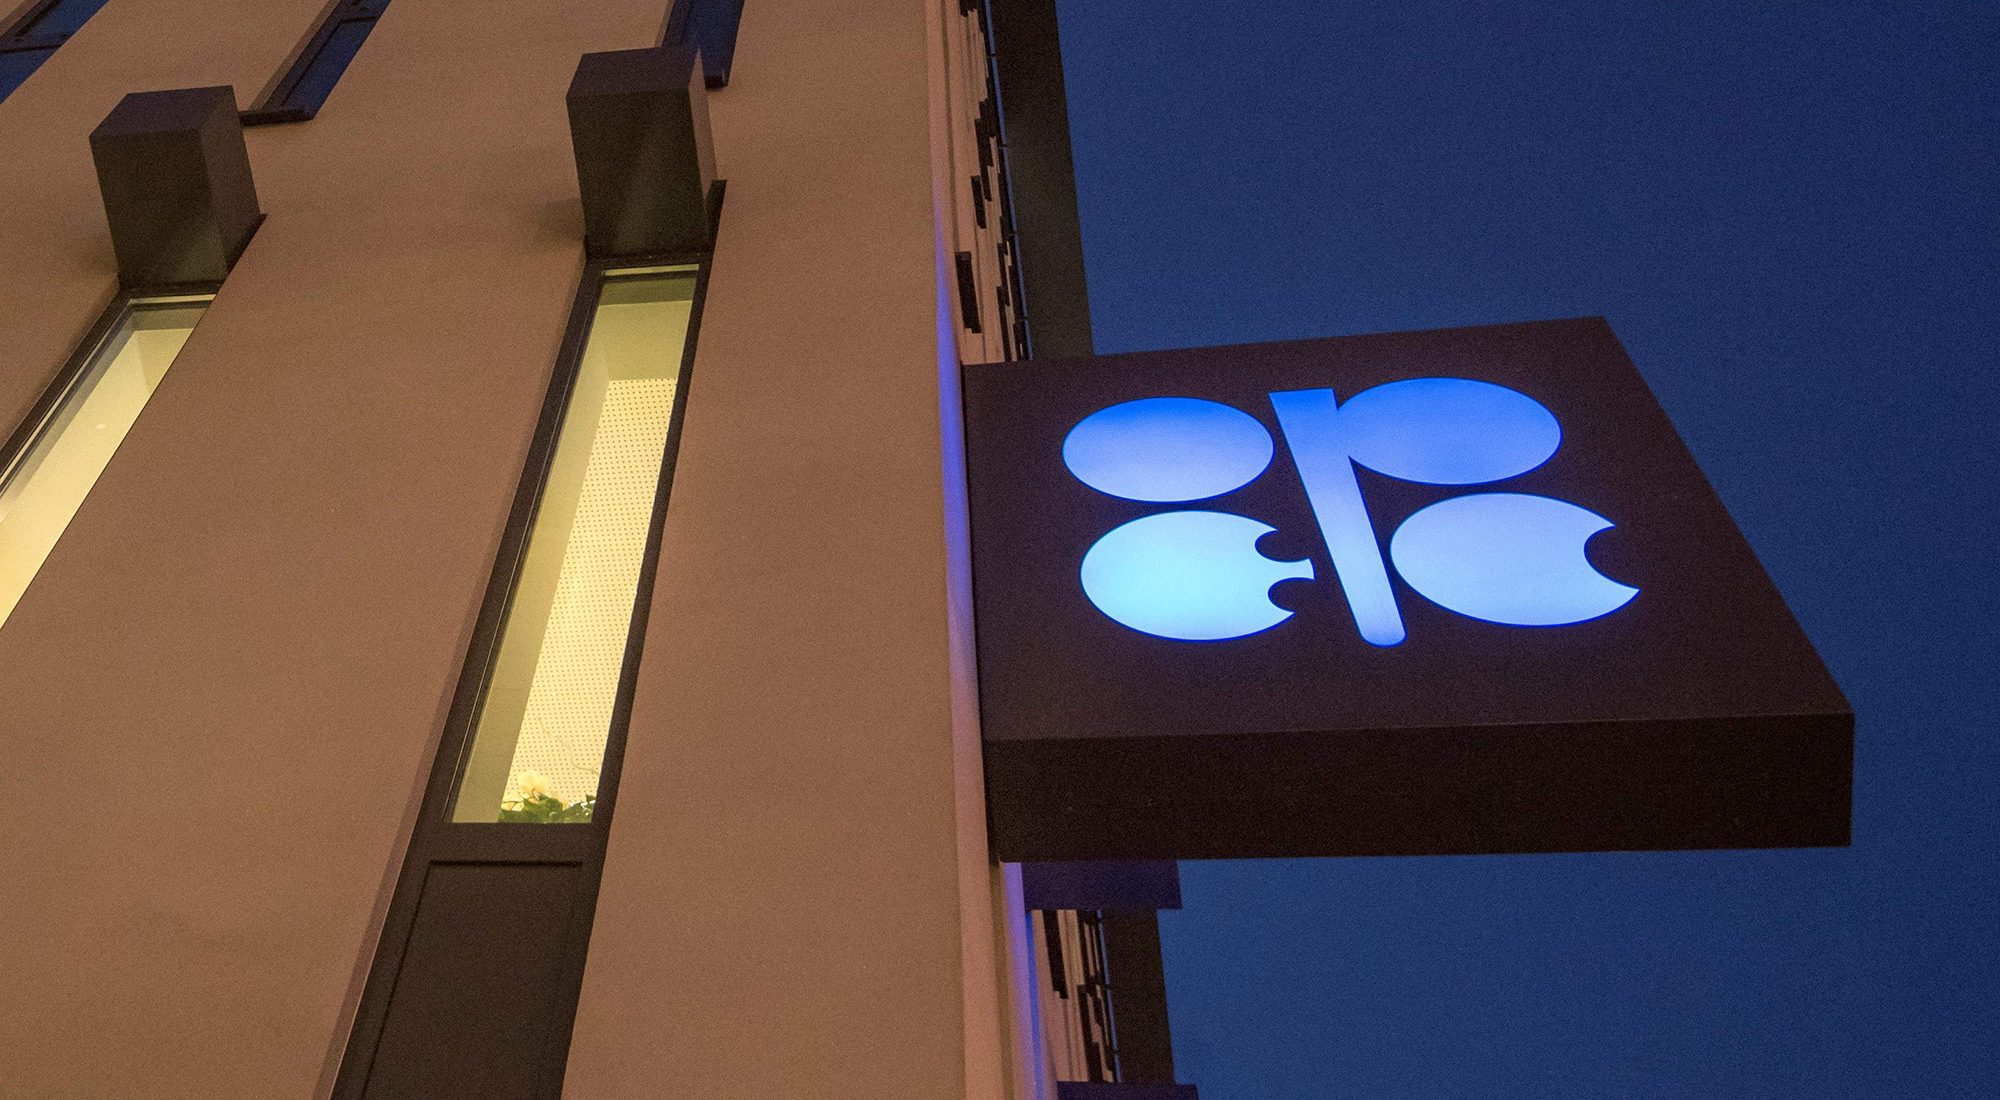 AUSTRIA-OPEC-ENERGY-OIL